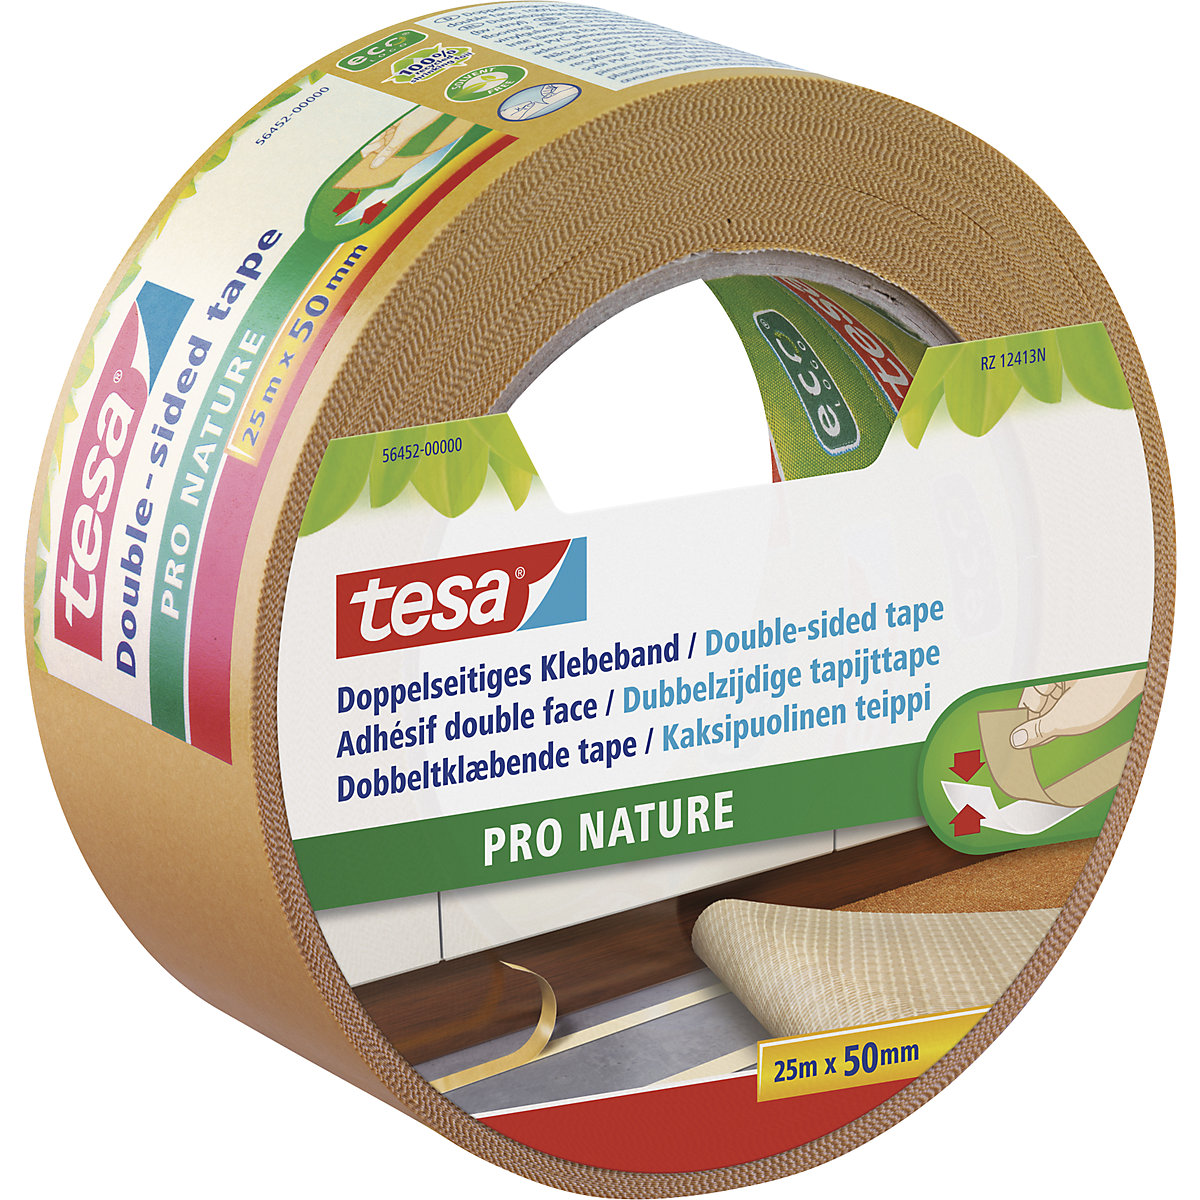 tesa double-sided adhesive tape 4934